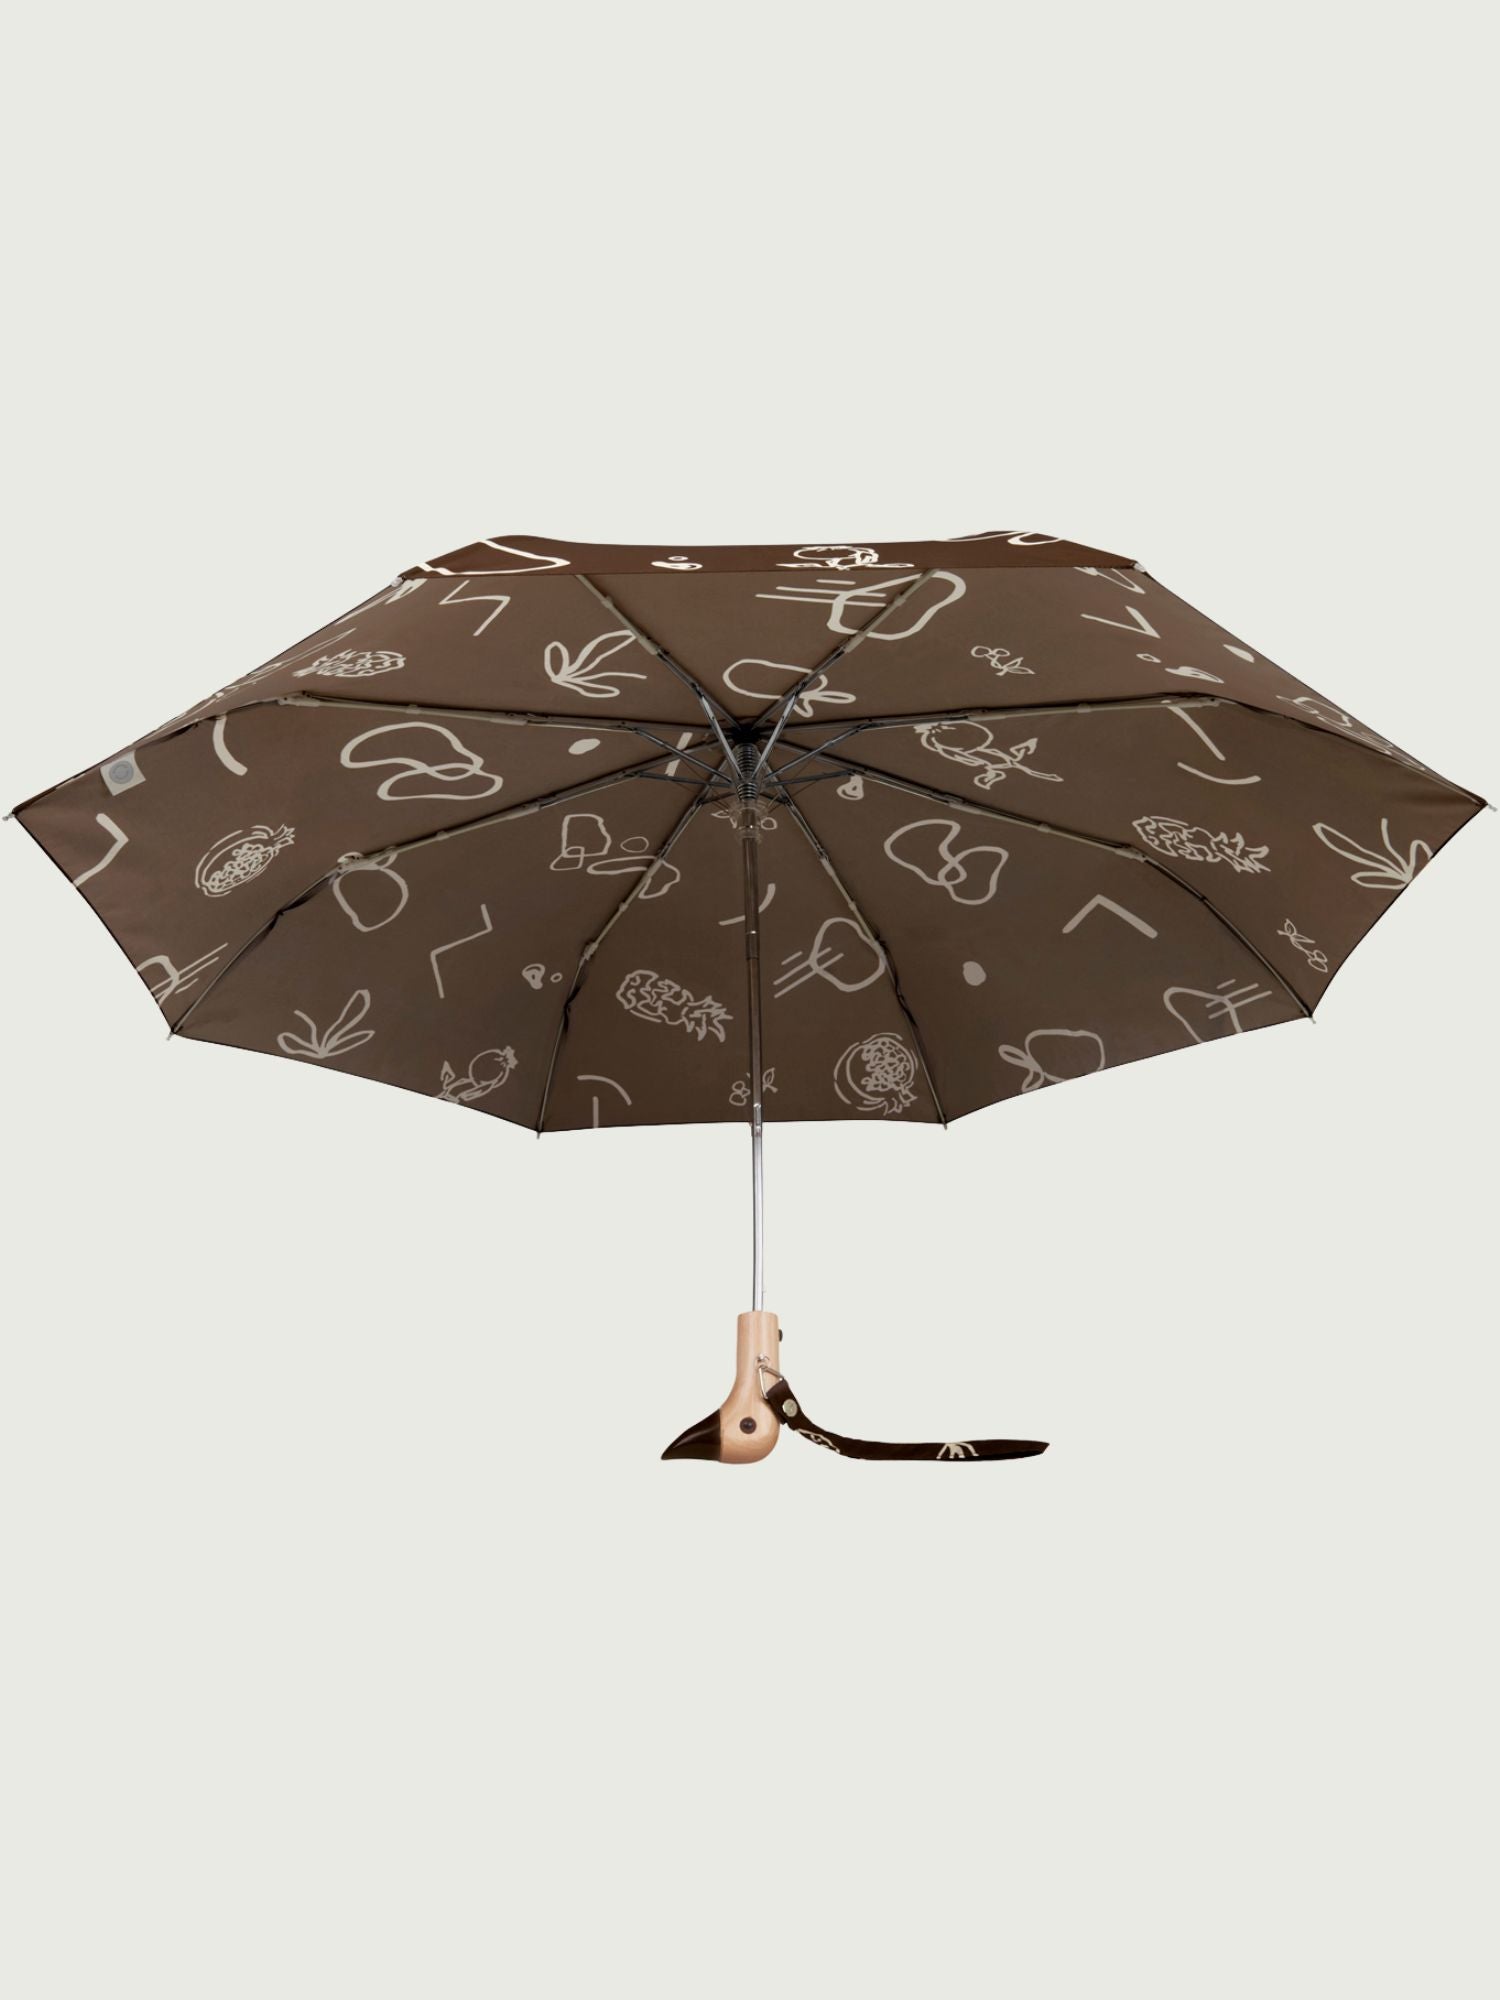 Chocolate Fruits & Shape Eco-Friendly Umbrella